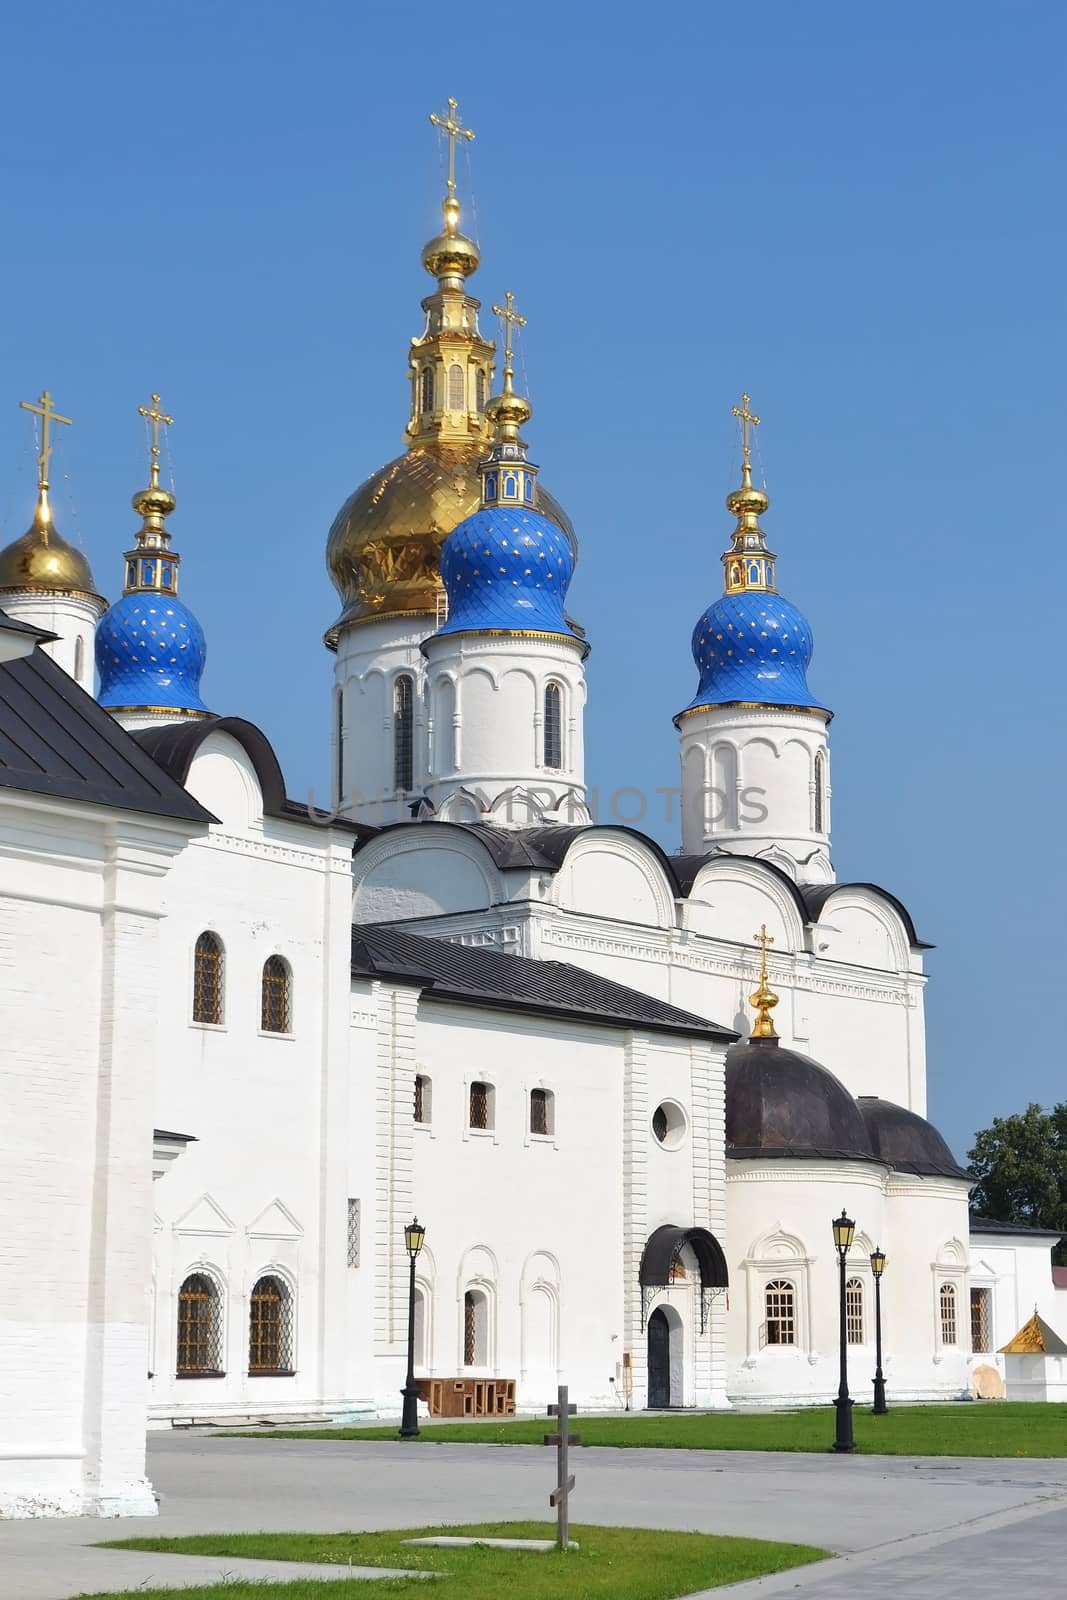 Sofia Assumption Cathedral of the Tobolsk Kremlin, Russia